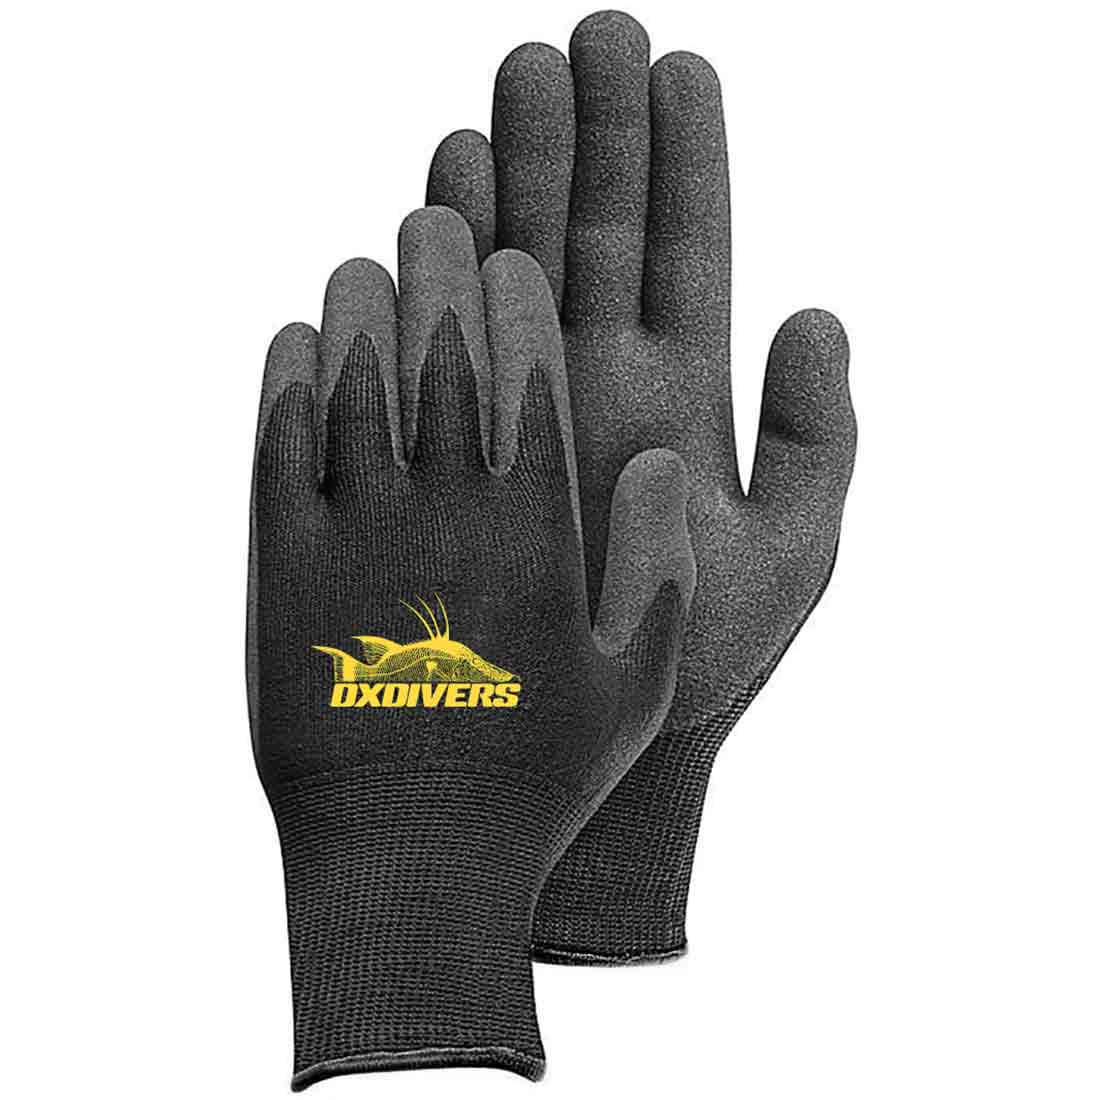 Safety Work Cut Resistant Gloves